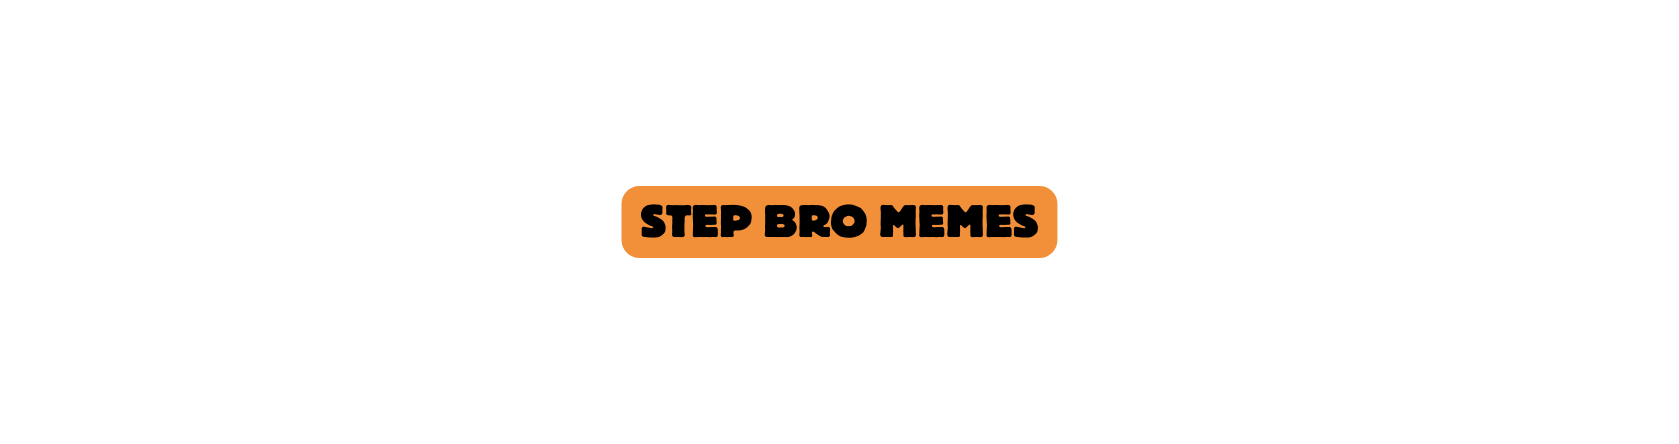 Step bro Memes